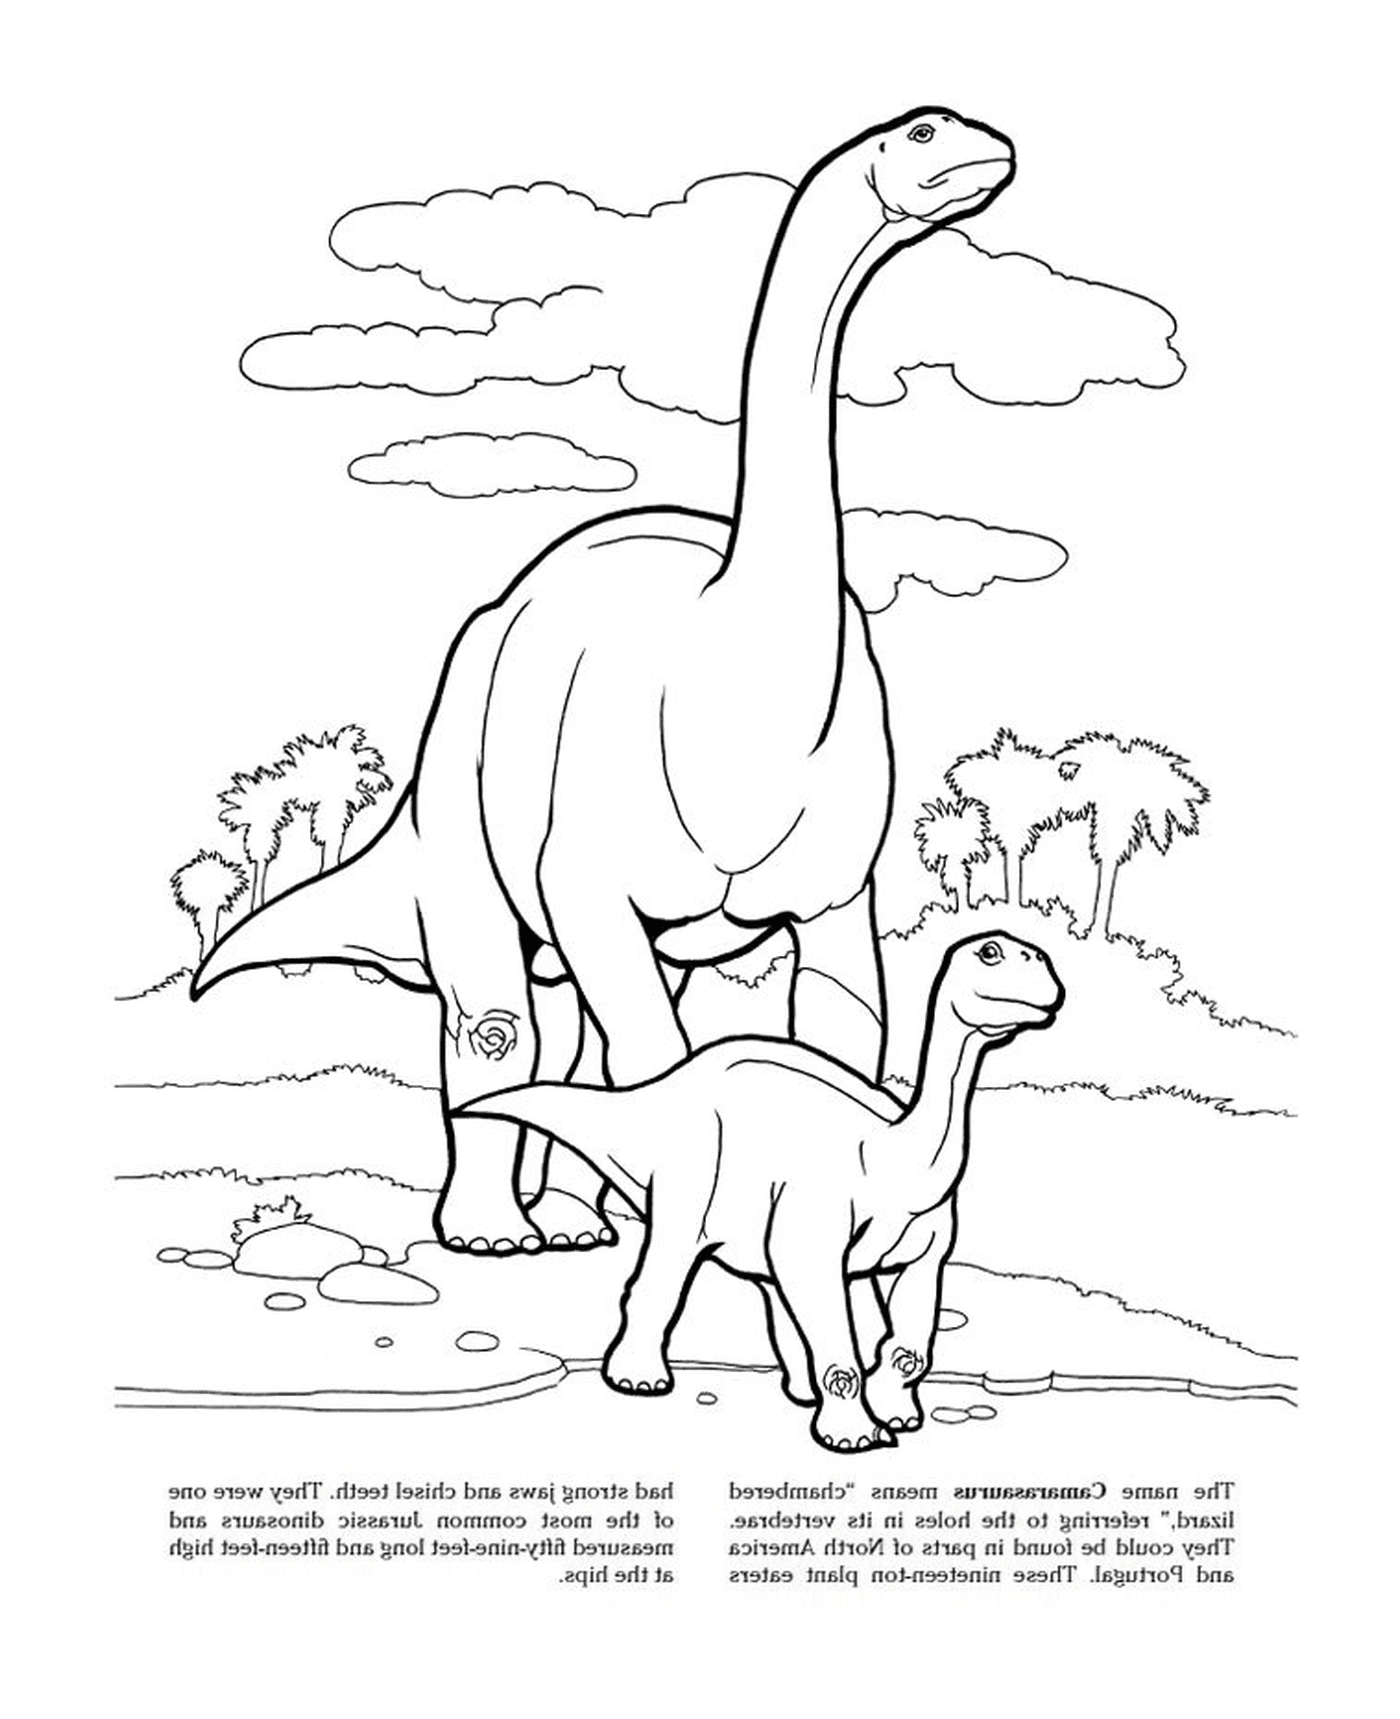   Camarasaurus de Jurassic Park, une famille de dinosaures 